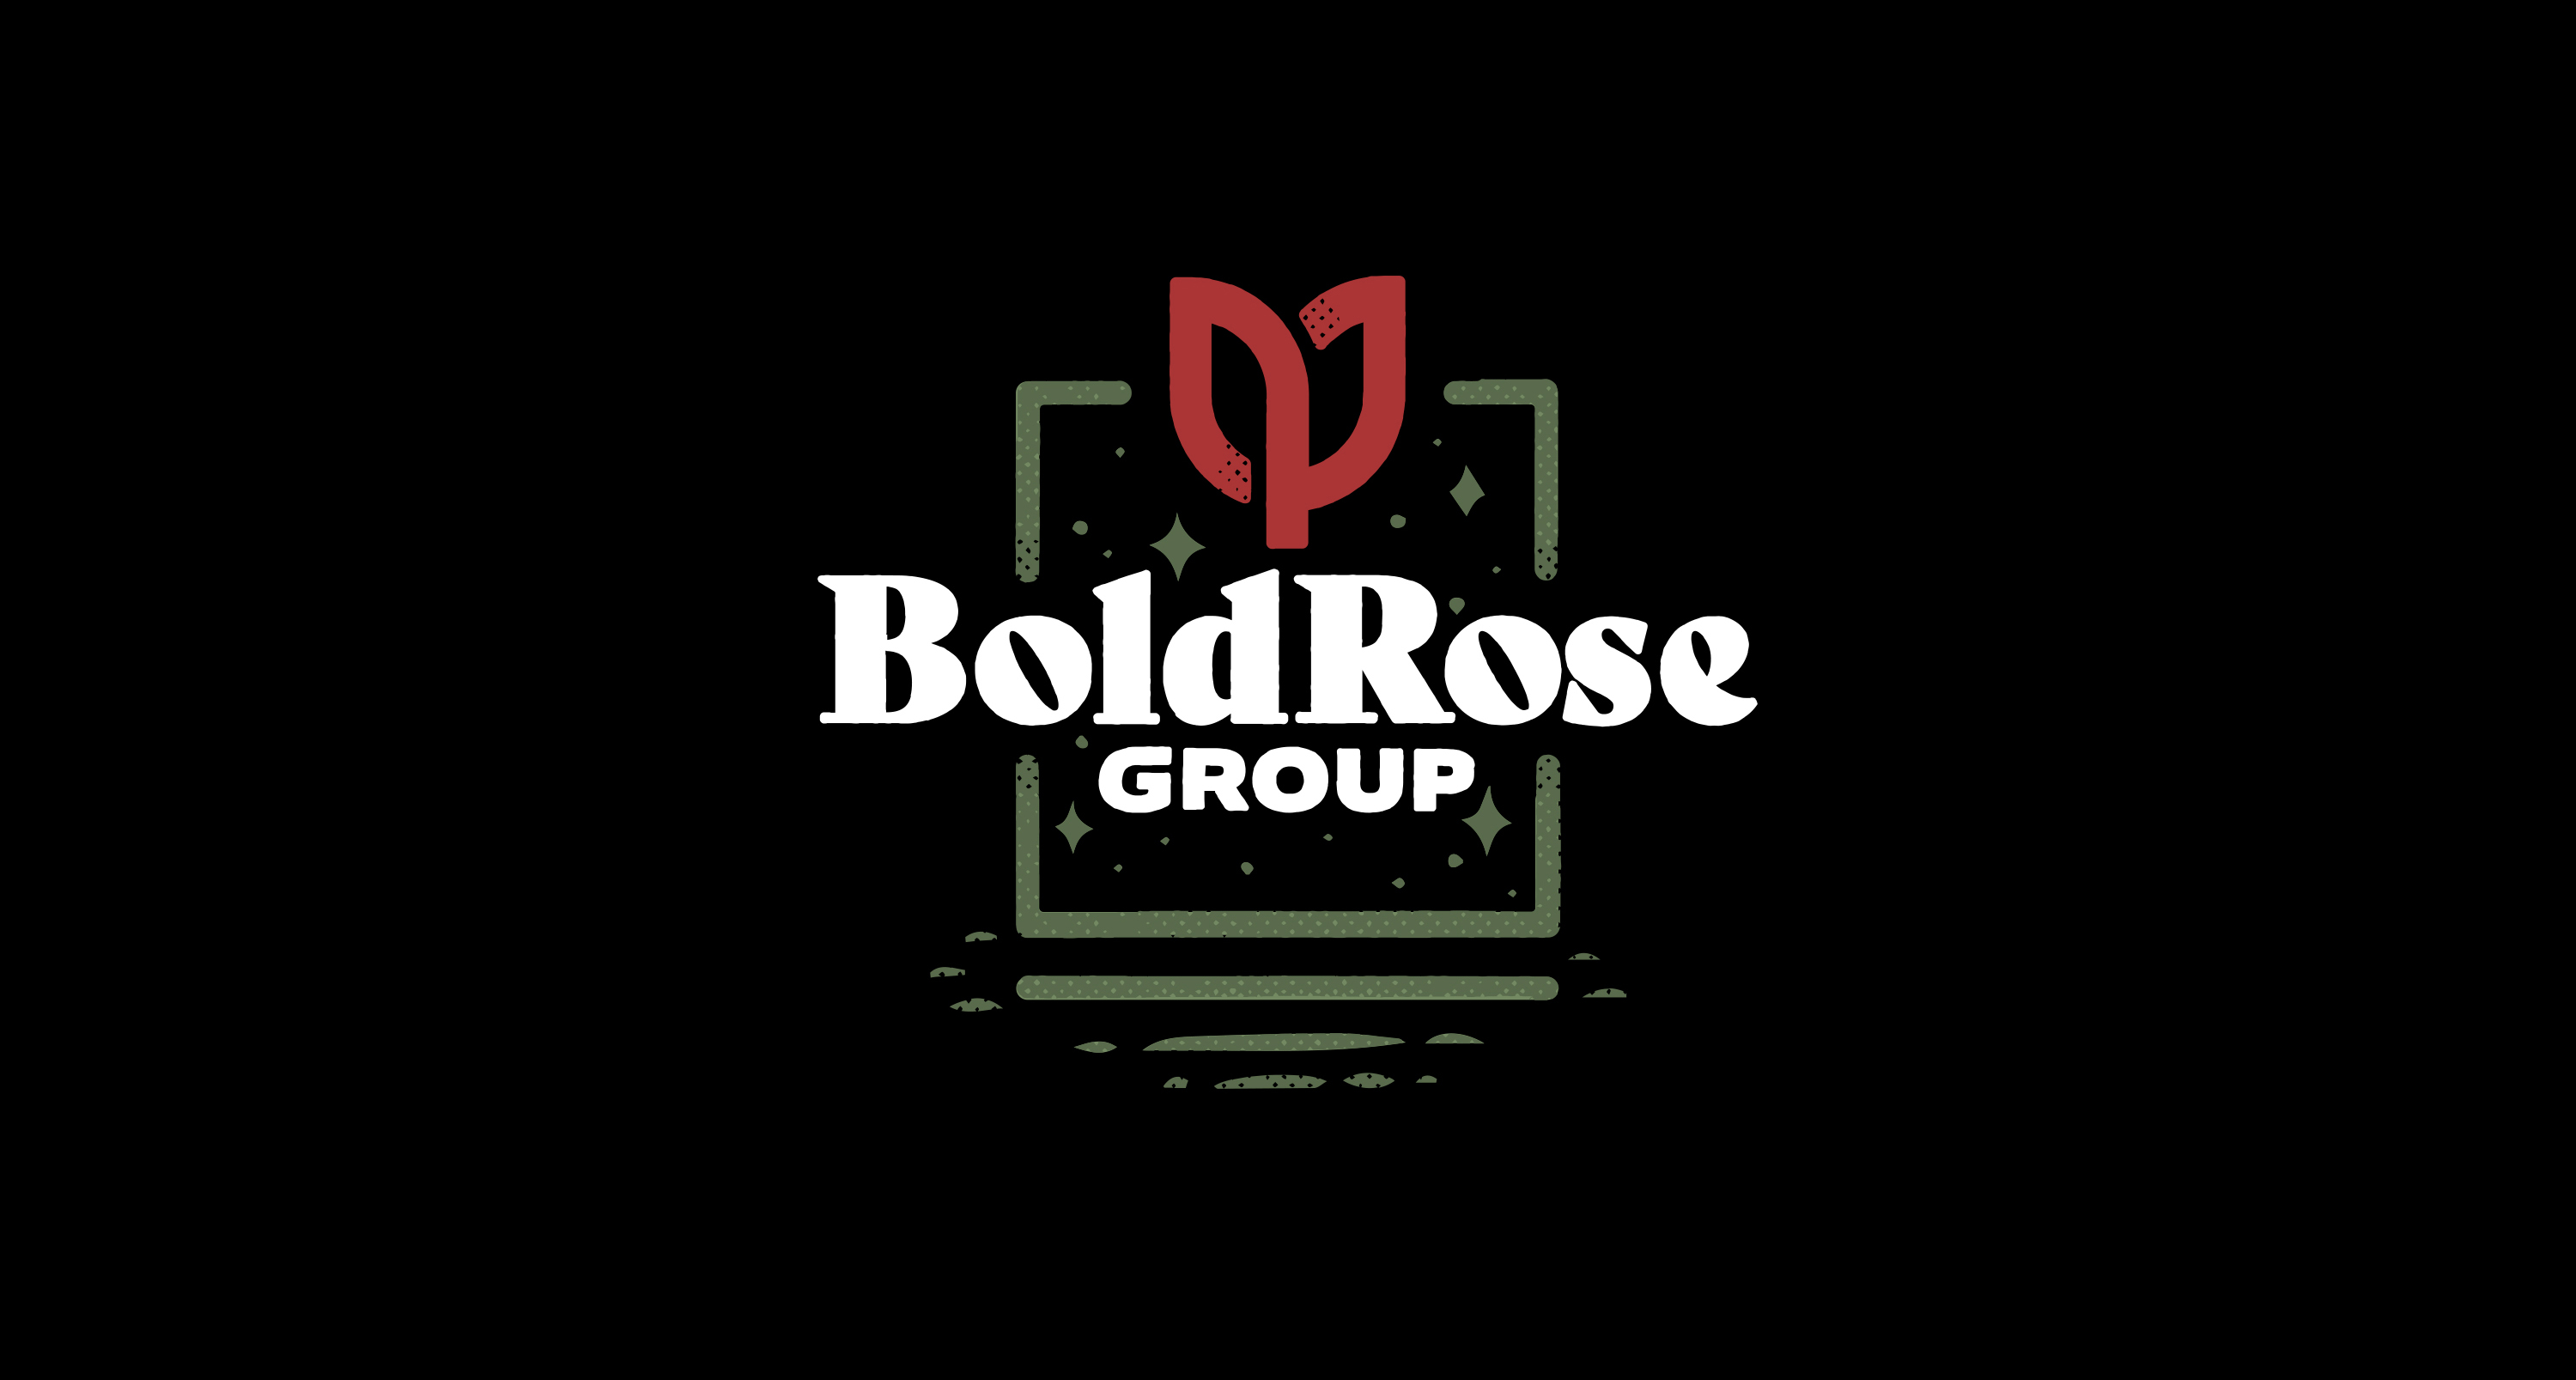 Bold Rose Group Brand Identity